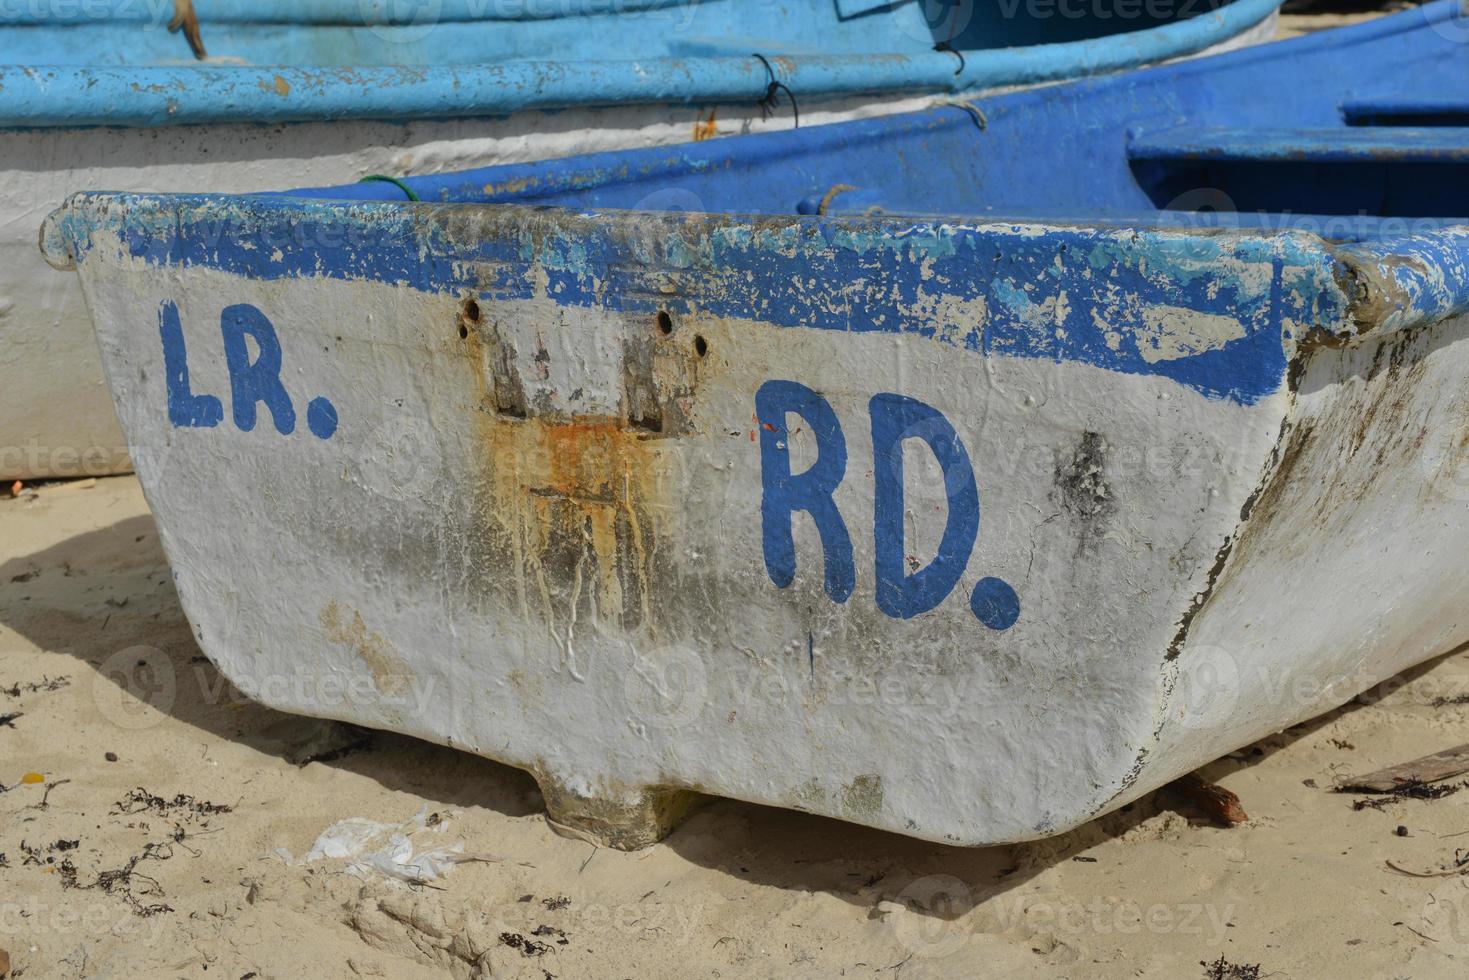 barco de playa macao, punta cana, republica dominicana foto